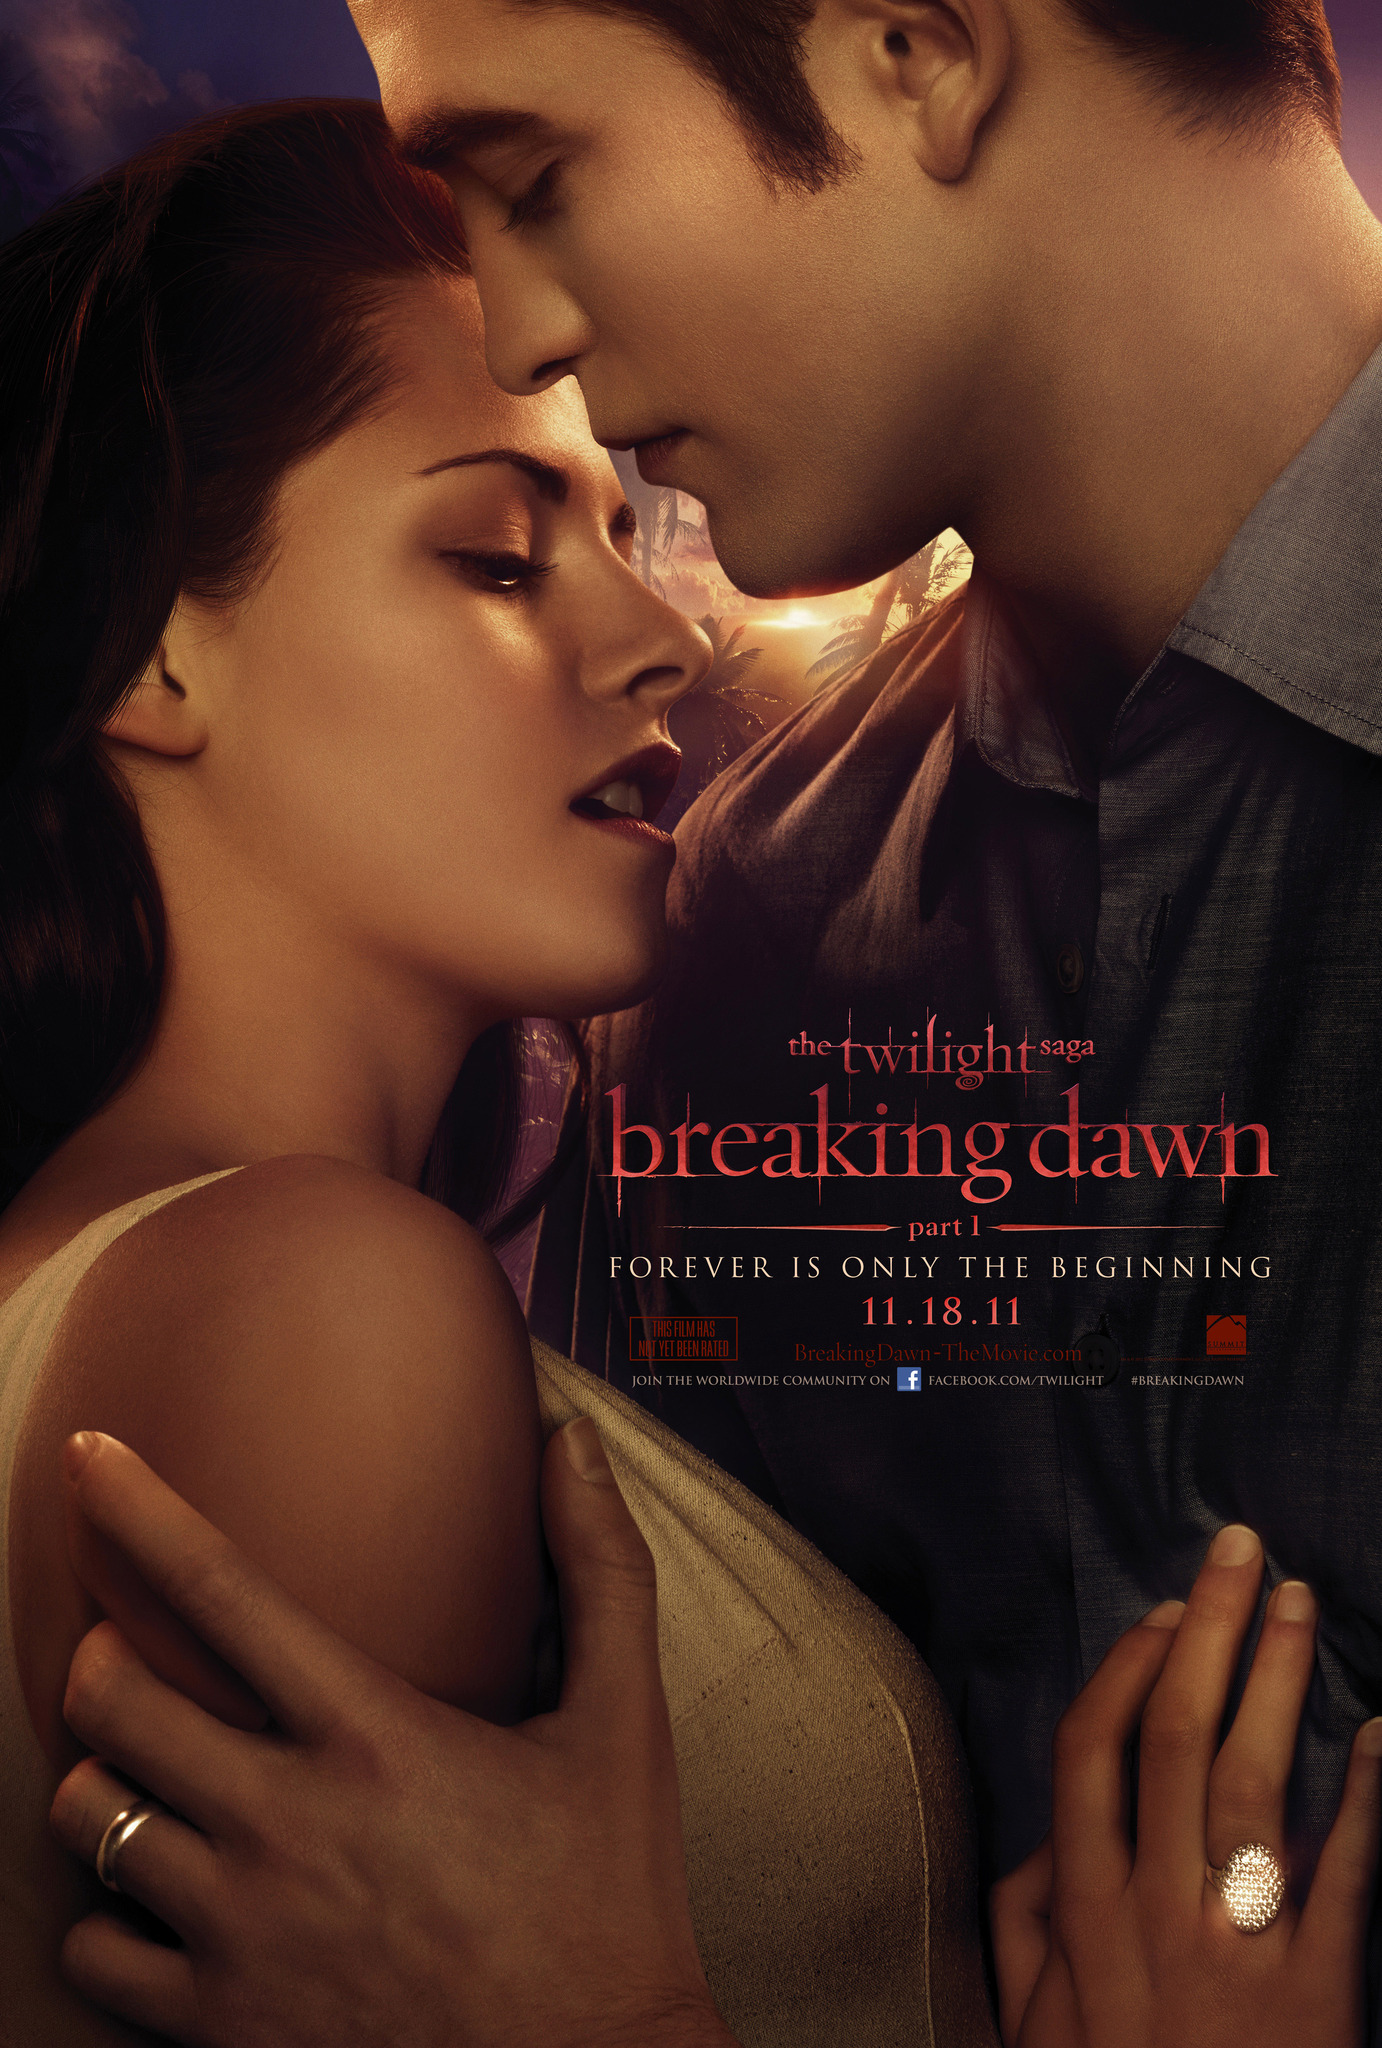 Vampire Twilight 4 Saga Breaking Dawn Part 1 (2011) แวมไพร์ ทไวไลท์ ภาค4 เบรกกิ้งดอน ตอนที่ 1 Kristen Stewart